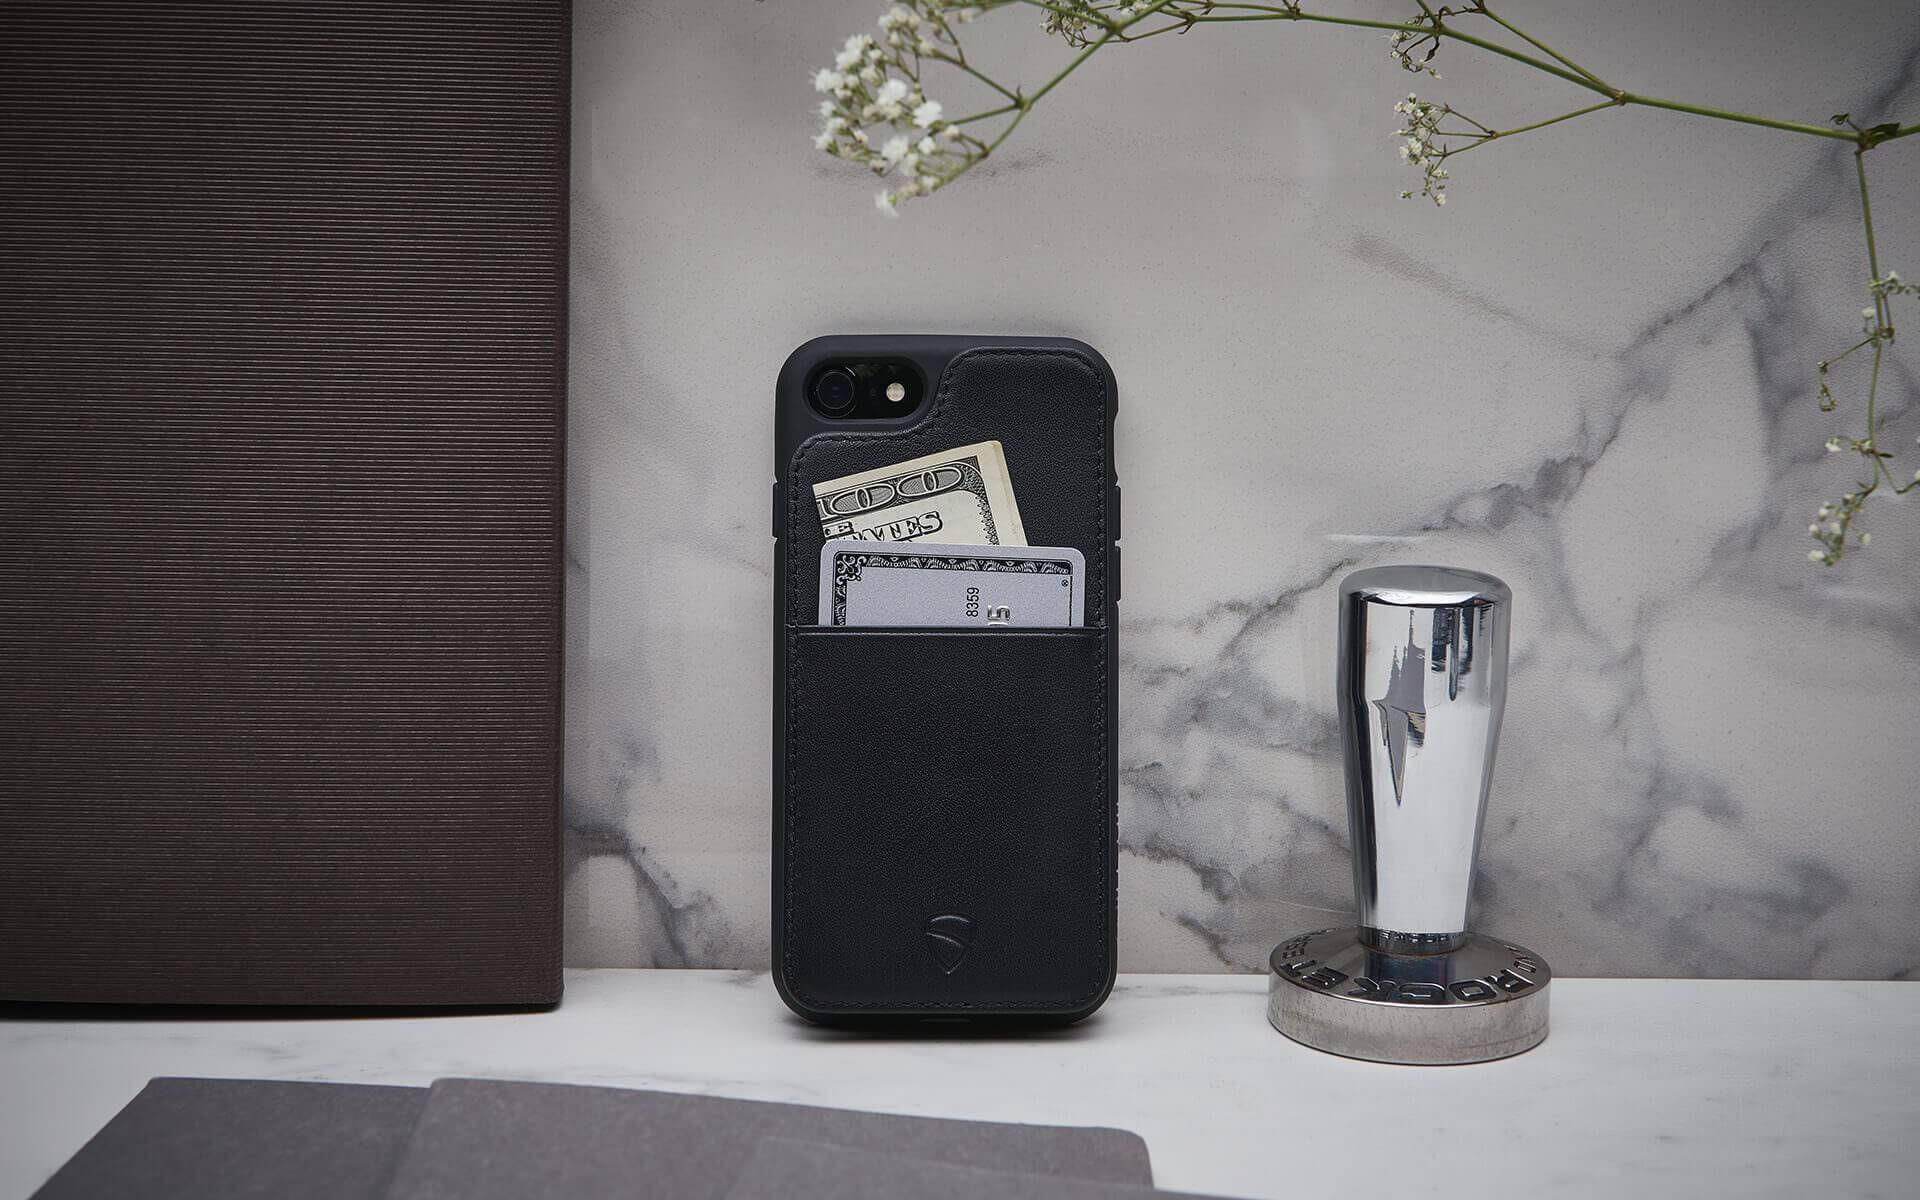 Olixar Armour Vault iPhone 11 Pro Max Tough Wallet Case - Black